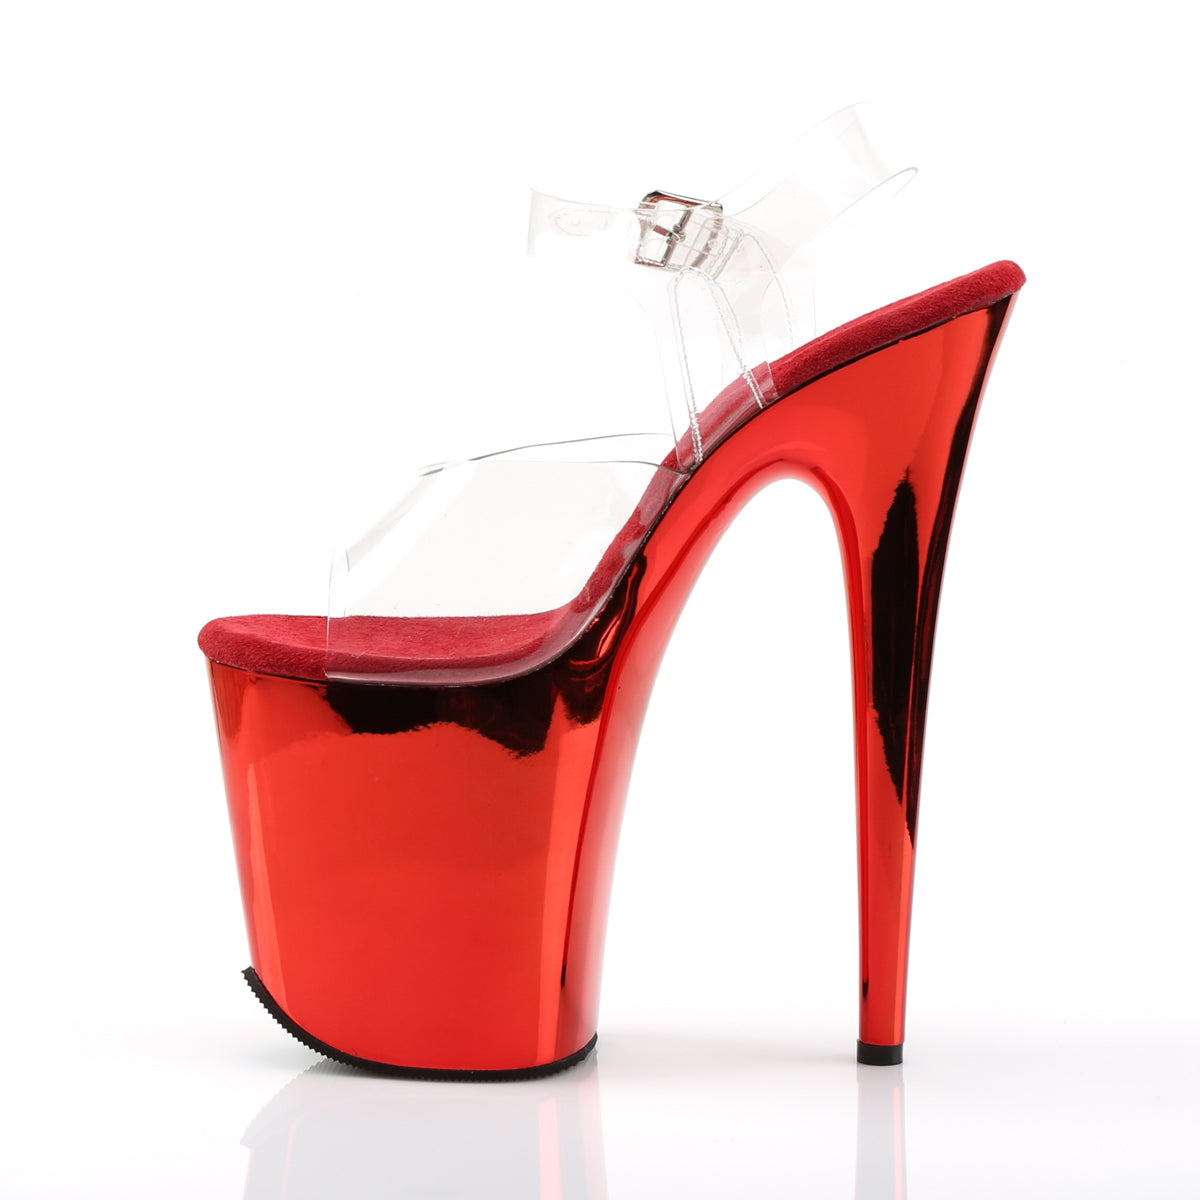 FLAMINGO-808 8" Heel Clear Red Chrome Pole Dancer Platforms-Pleaser- Sexy Shoes Pole Dance Heels